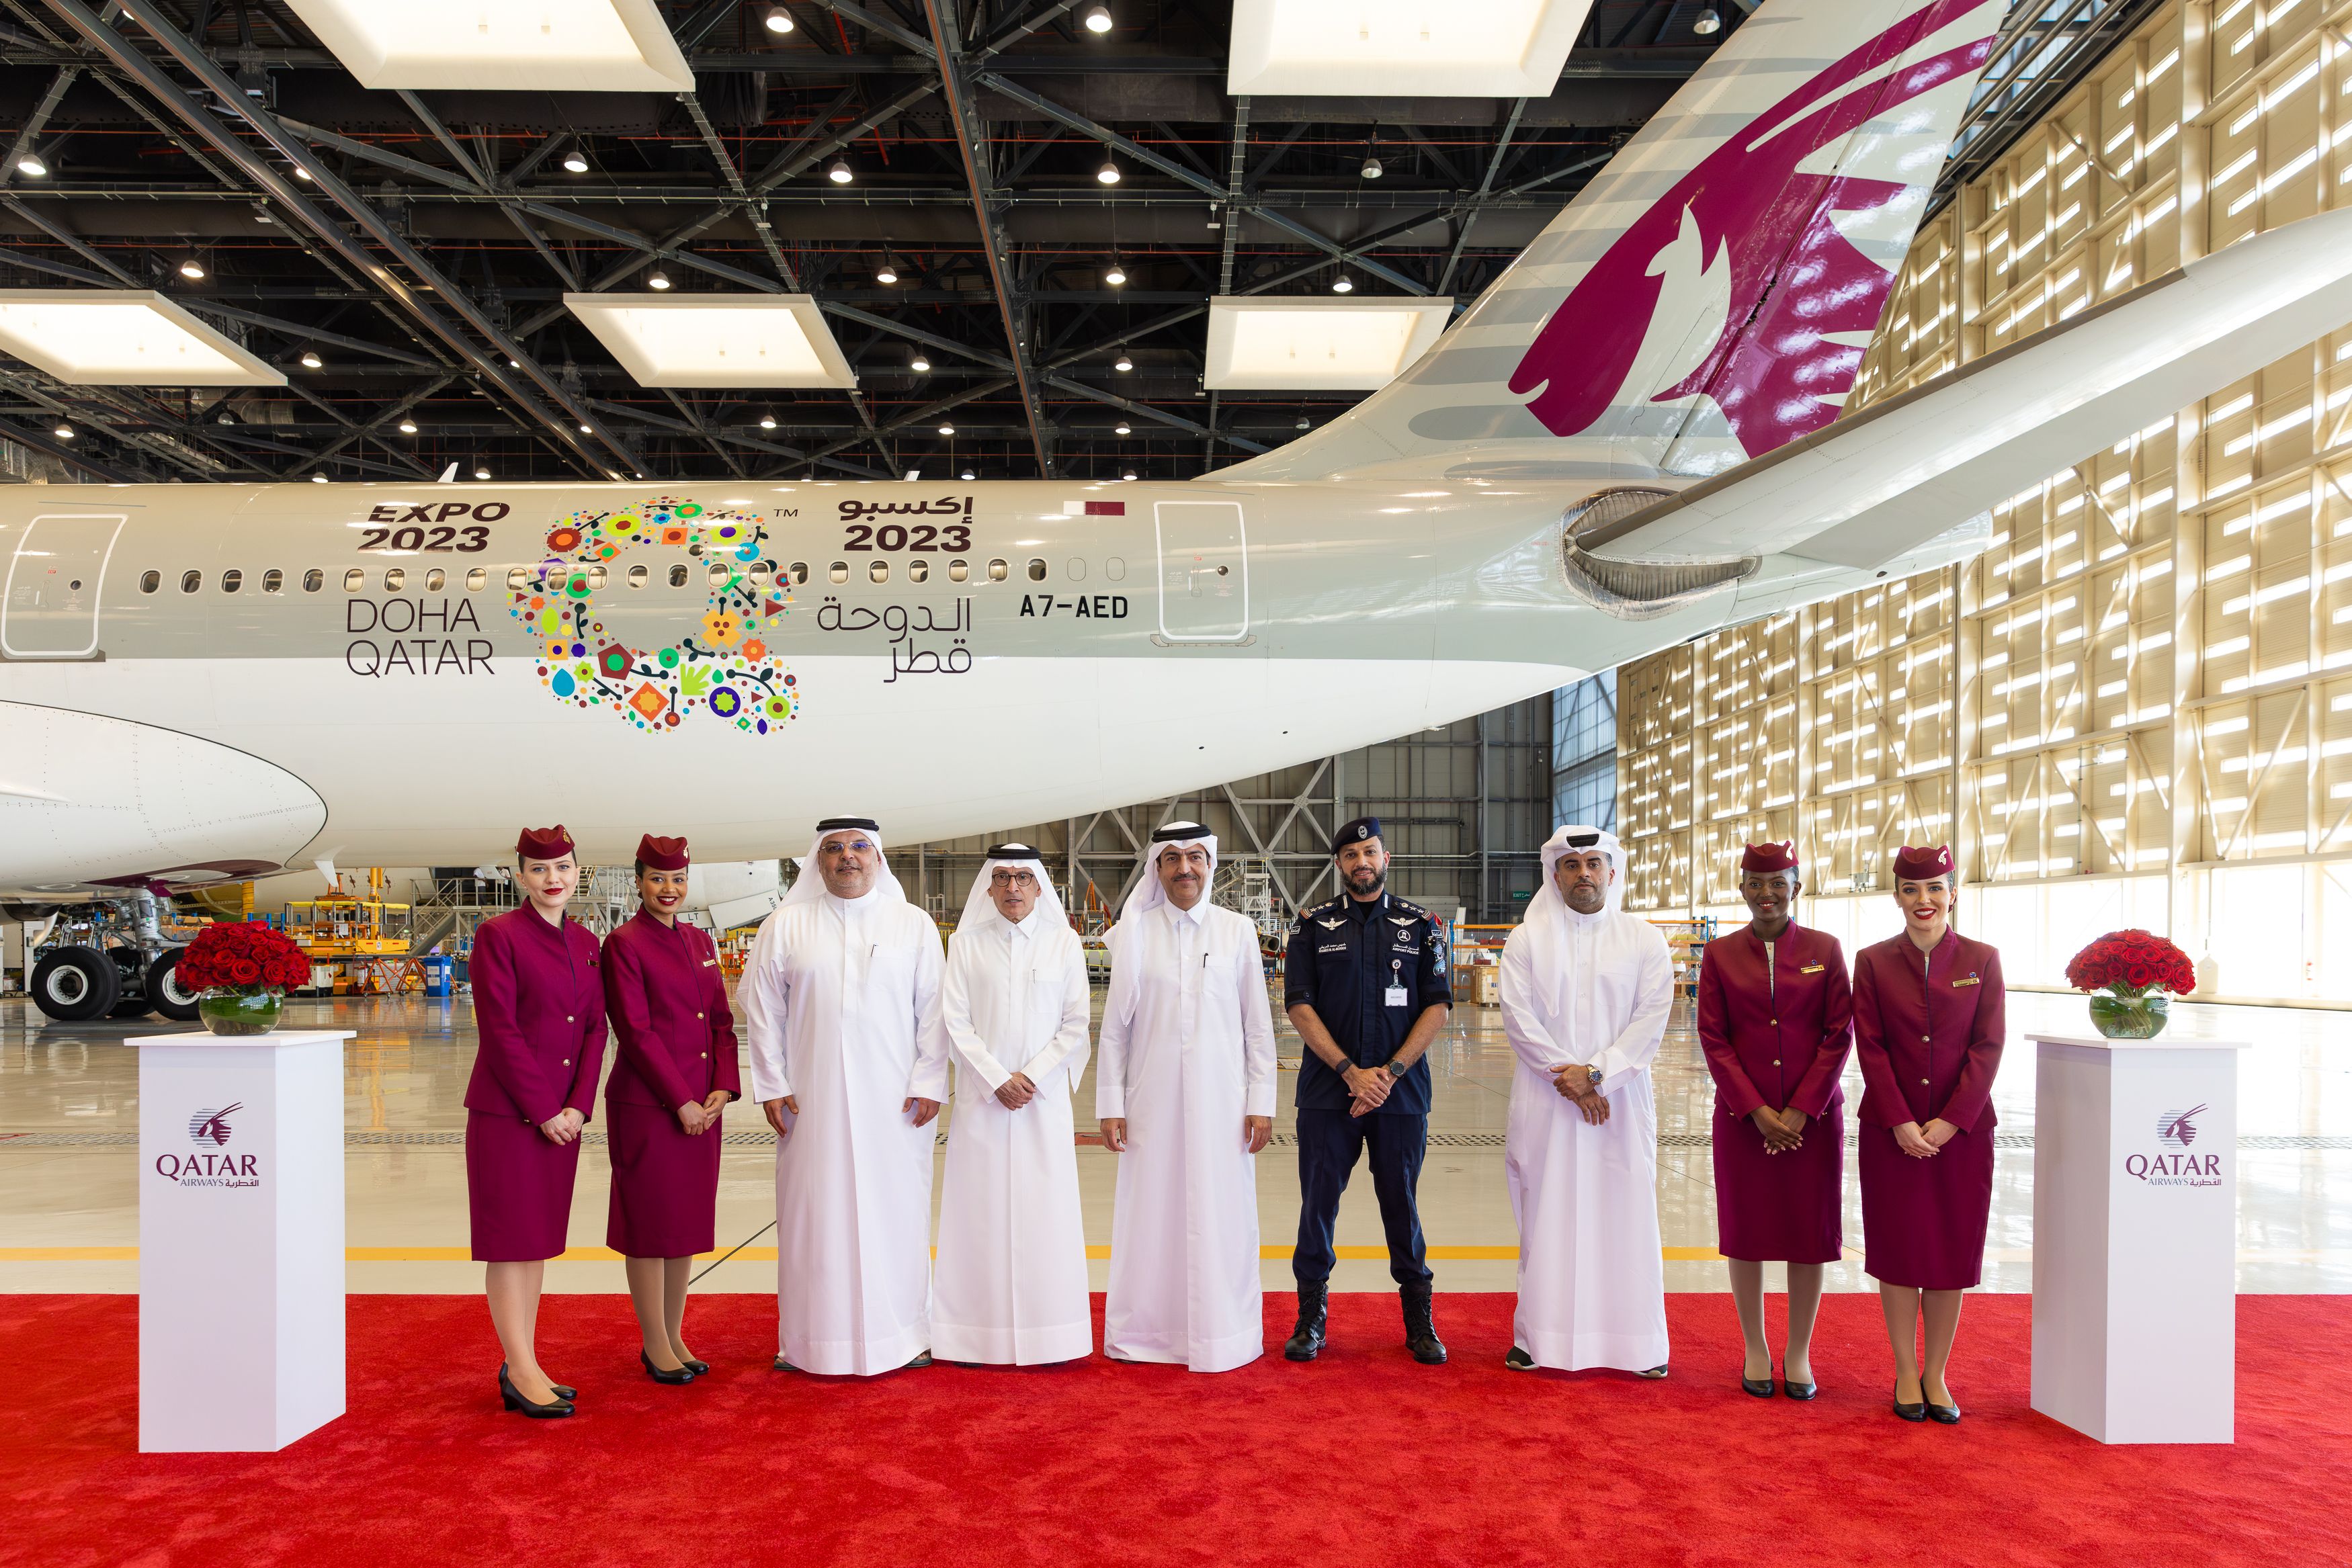 Qatar Airways Expo 2023 Doha Airbus A330 Livery 